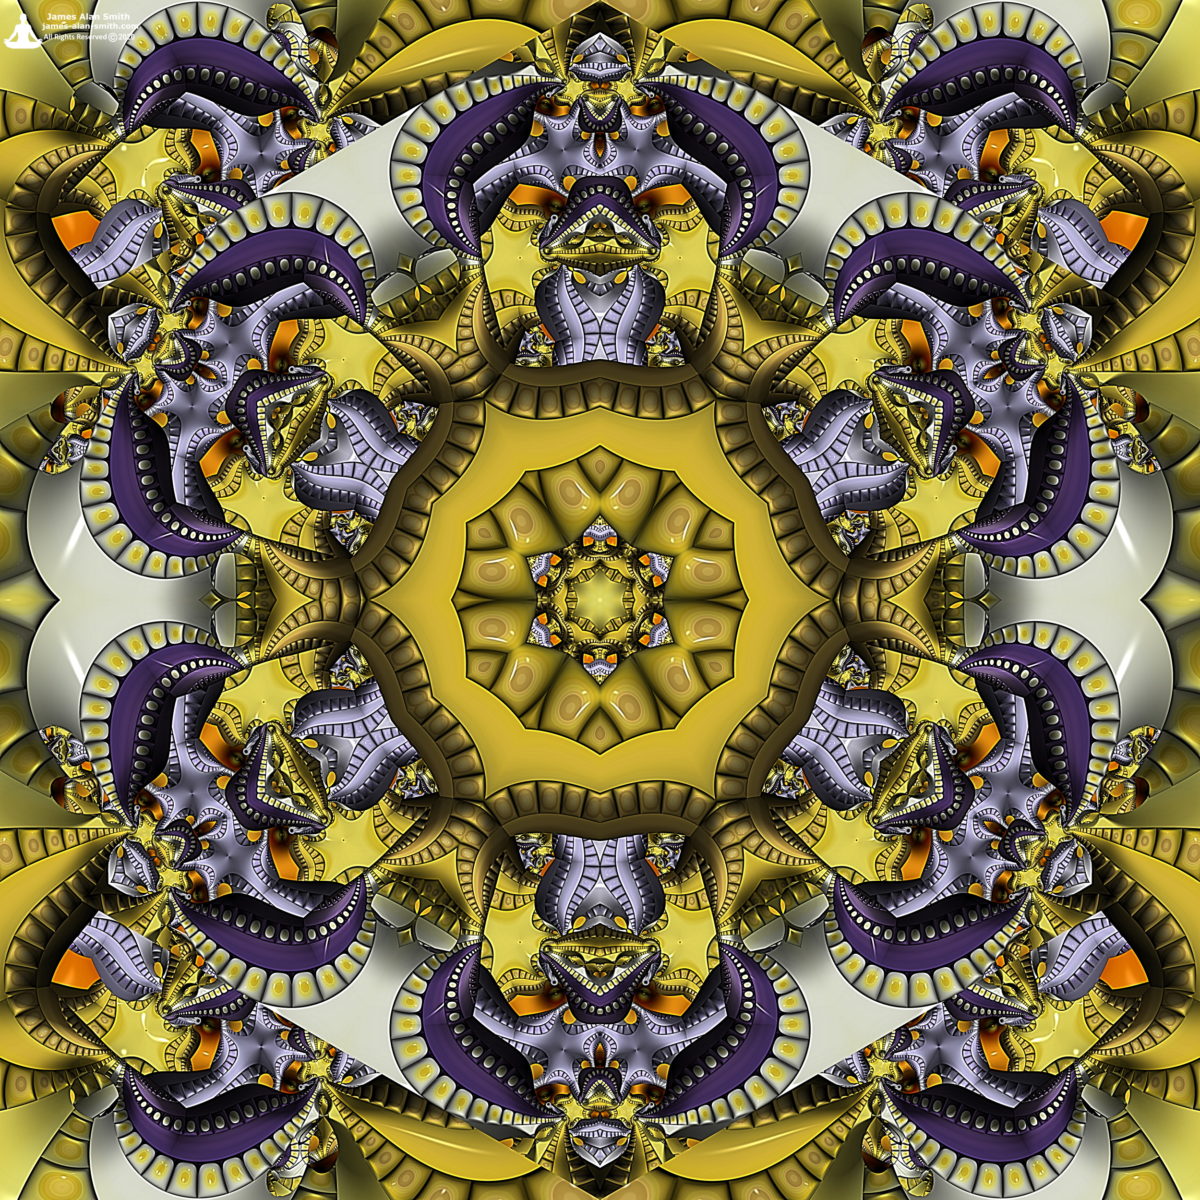 Unusual Mandala Series #02202020: Artwork by James Alan Smith